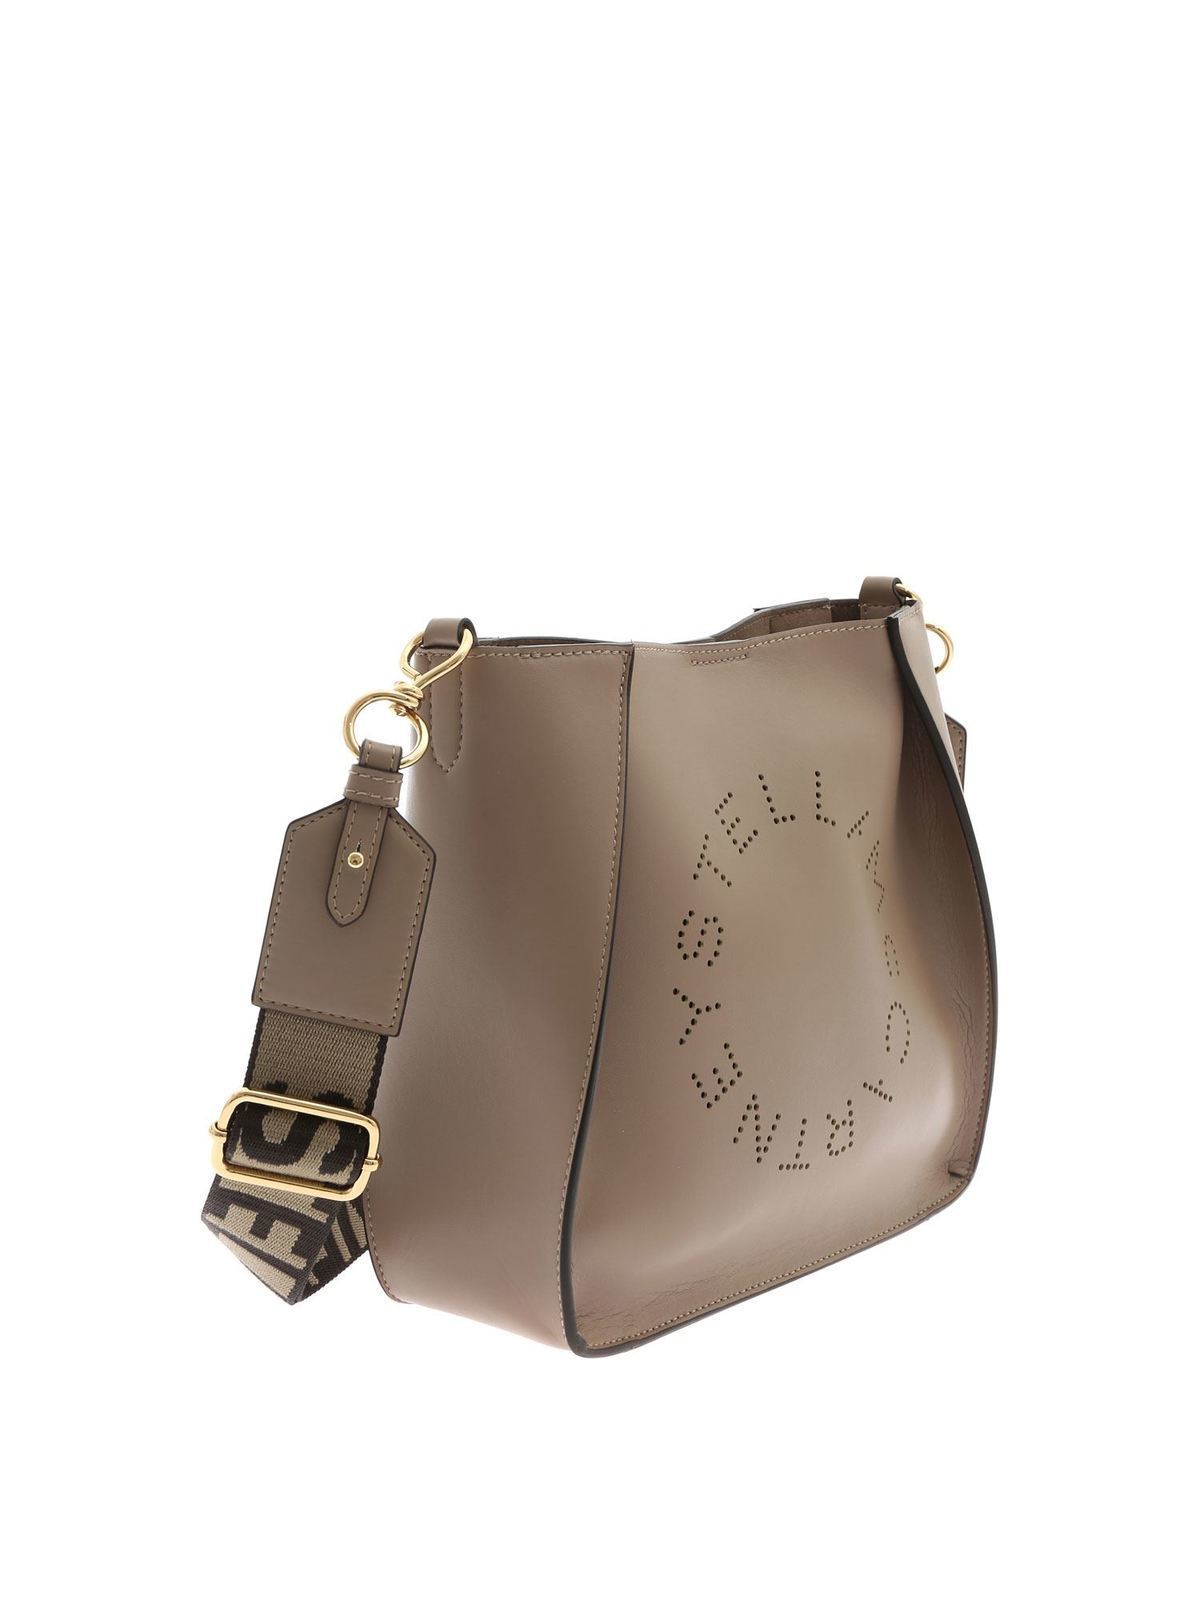 Cross body Stella Mccartney - mini bag in dove grey color - 700073W85422800